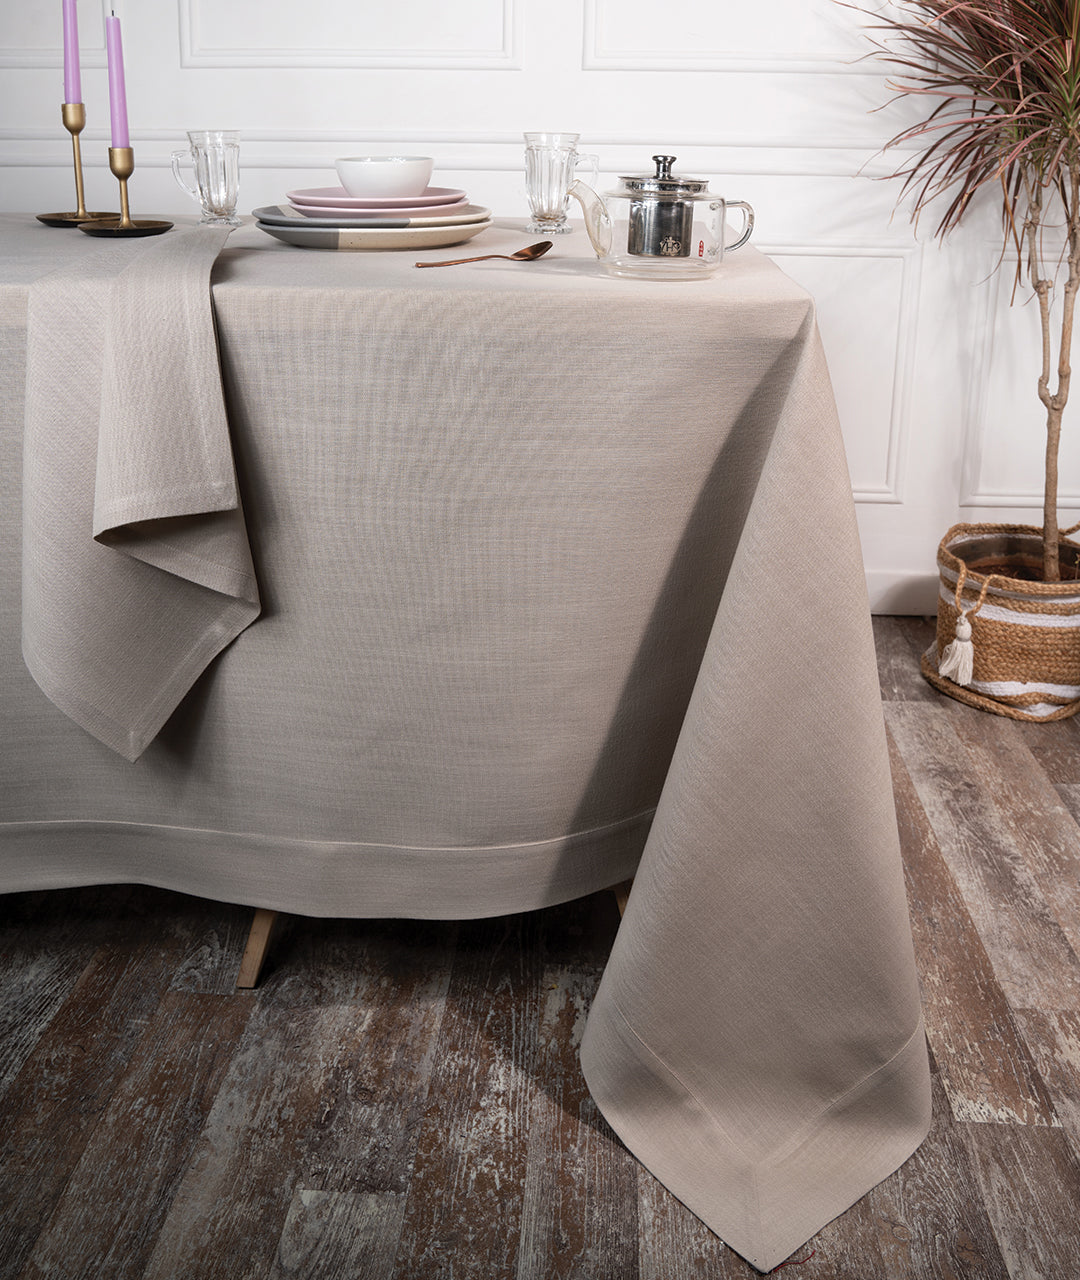 Natural Linen Textured Tablecloth - Mitered Corner